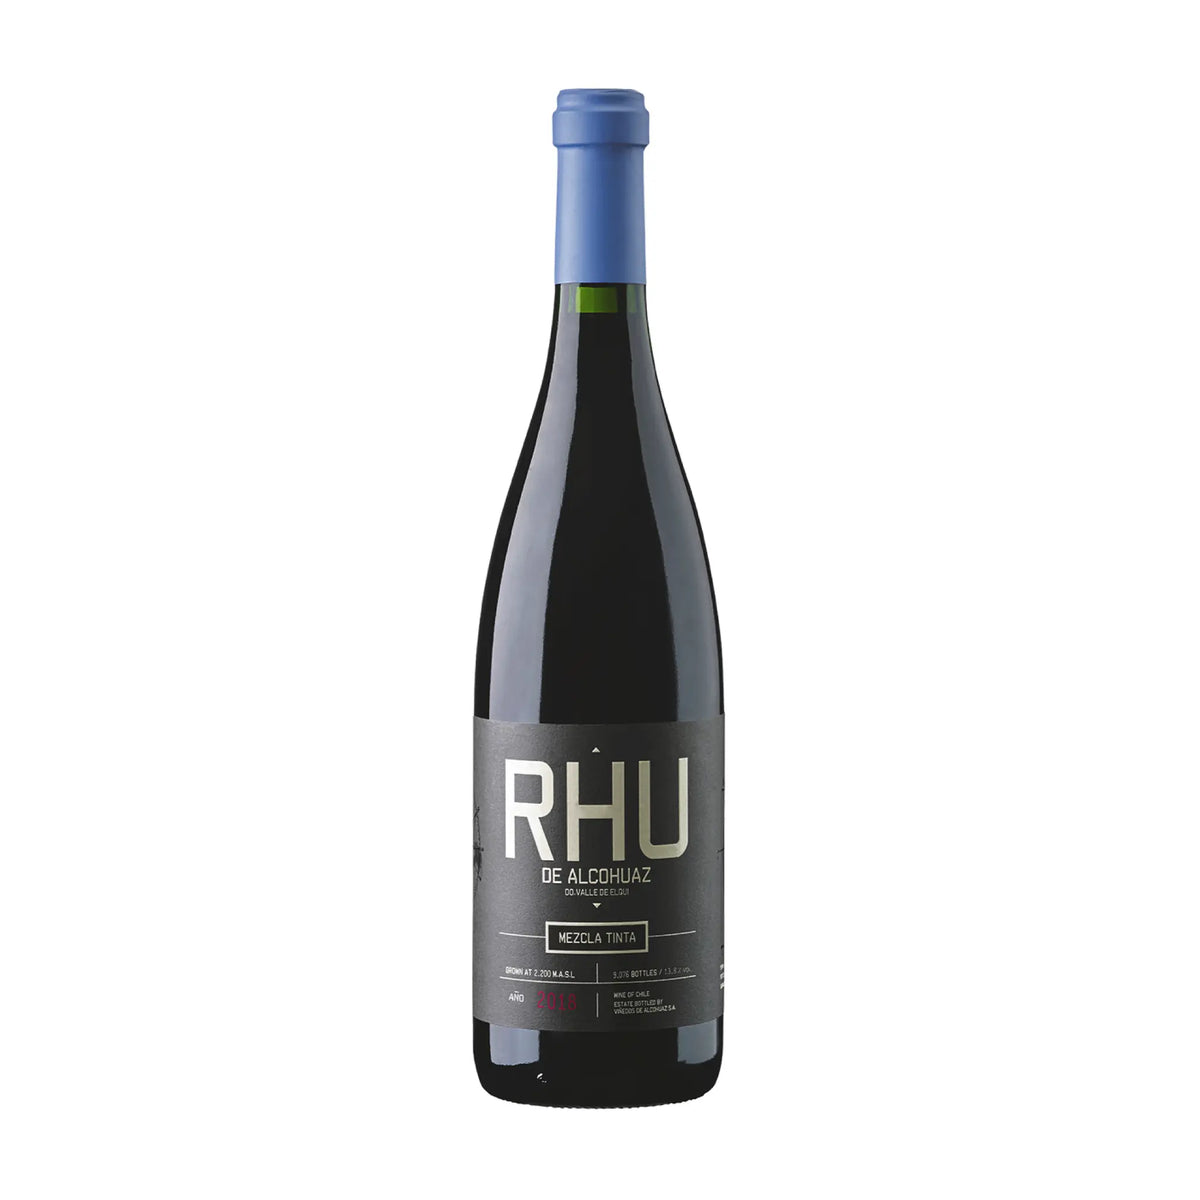 Viñedos de Alcohuaz-Rotwein-Cuvée-Chile-Choapa-2018 RHU mezcla tinta-WINECOM